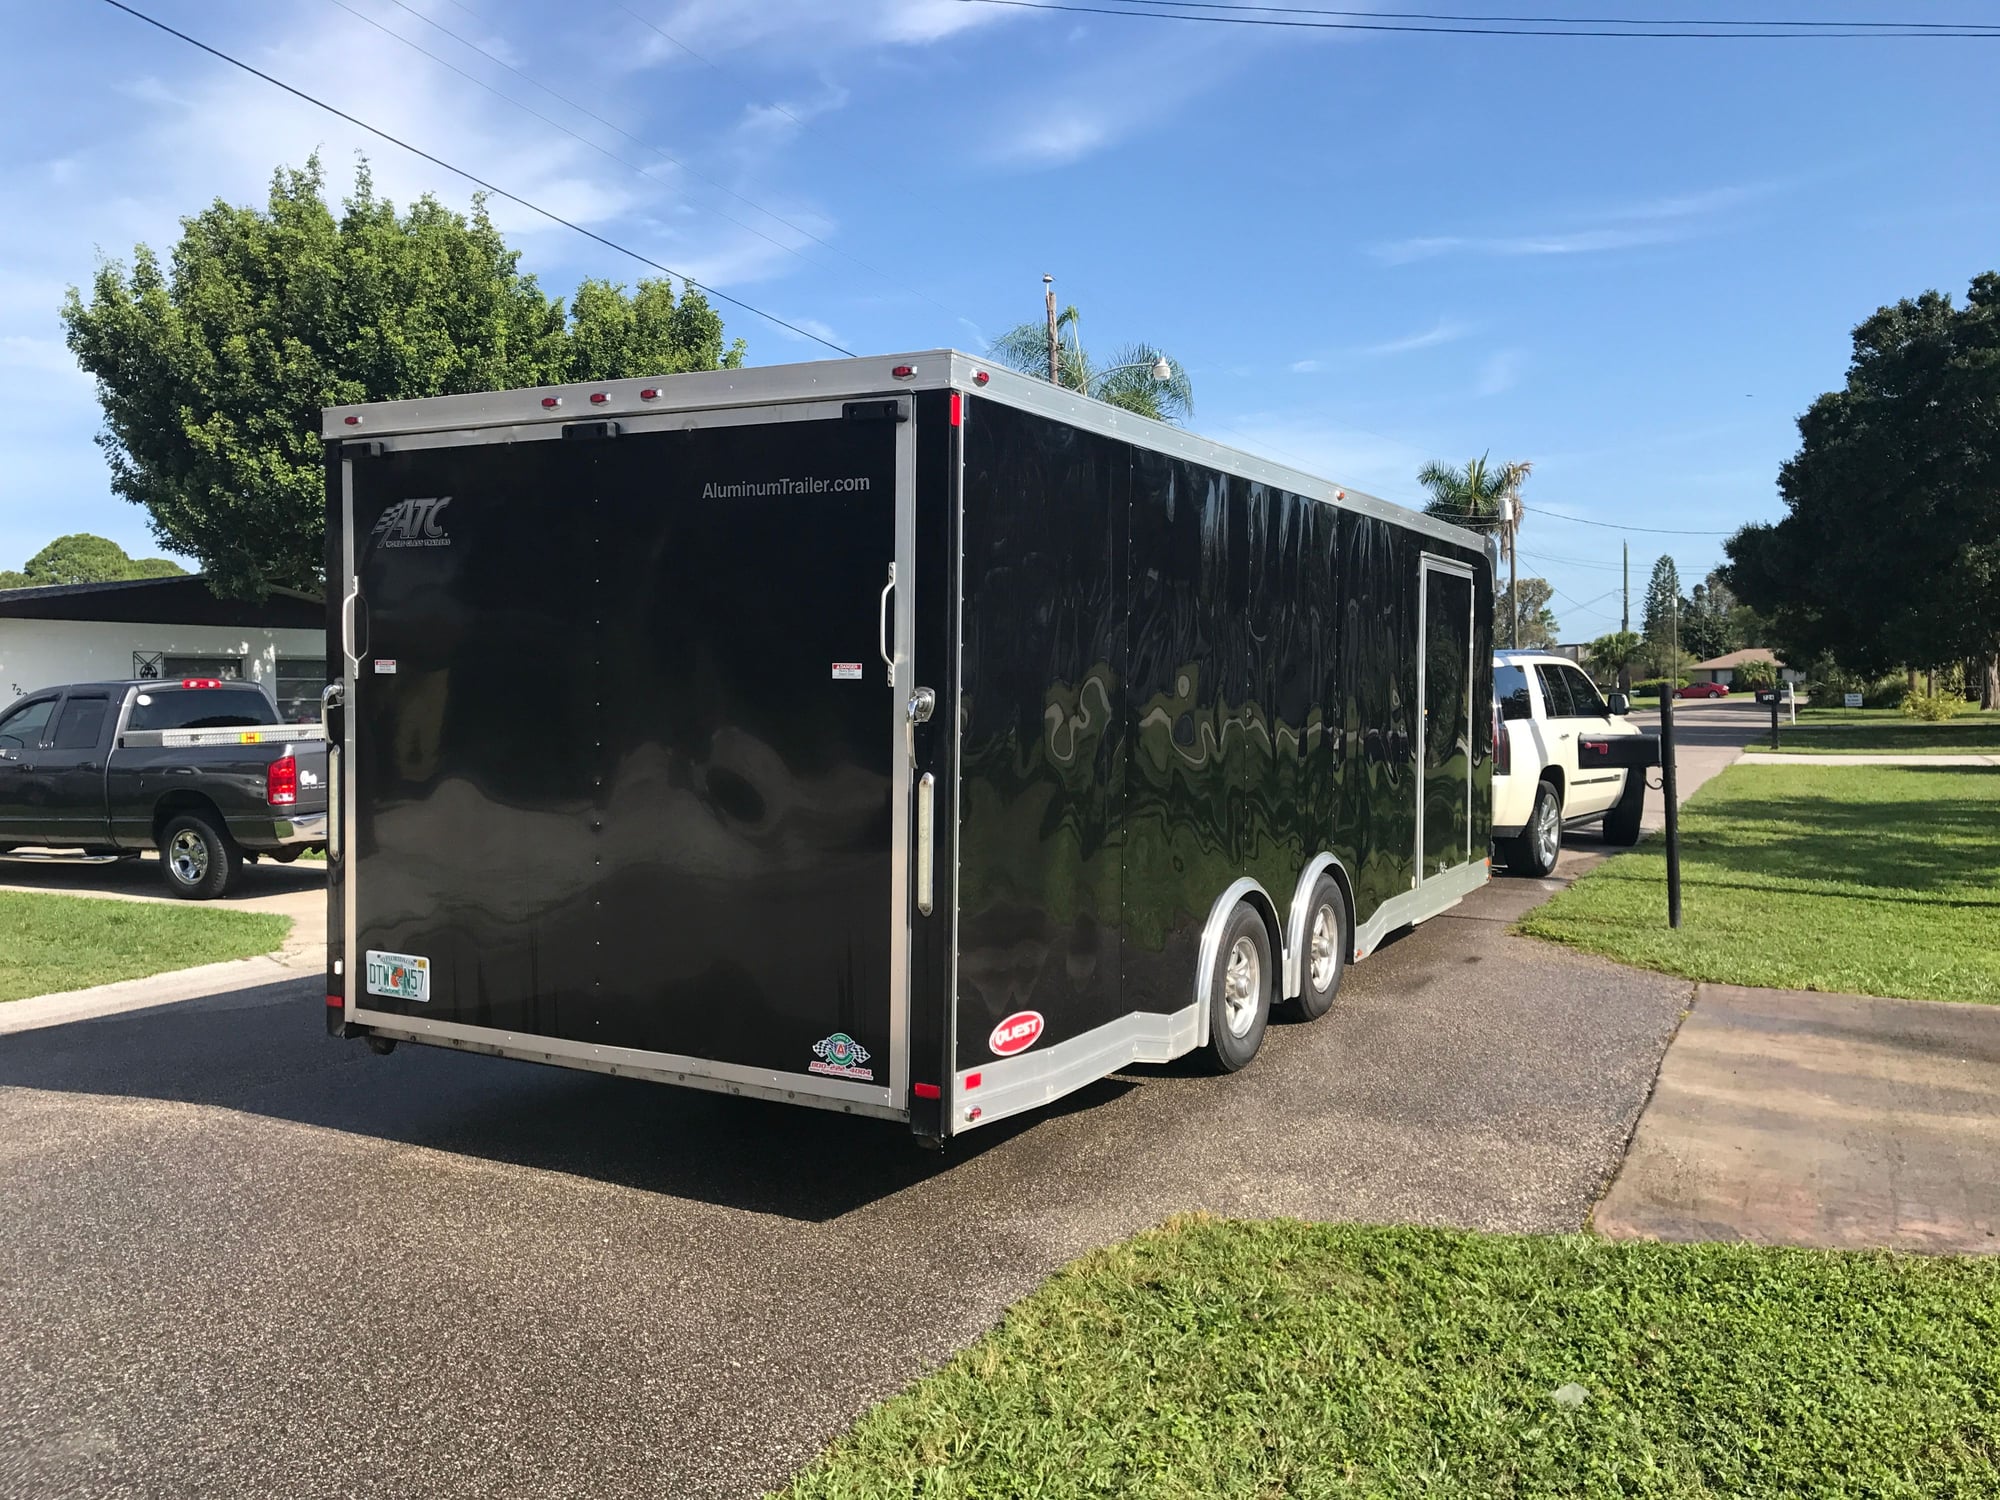 FS (For Sale) 24 ft enclosed trailer - CorvetteForum ...